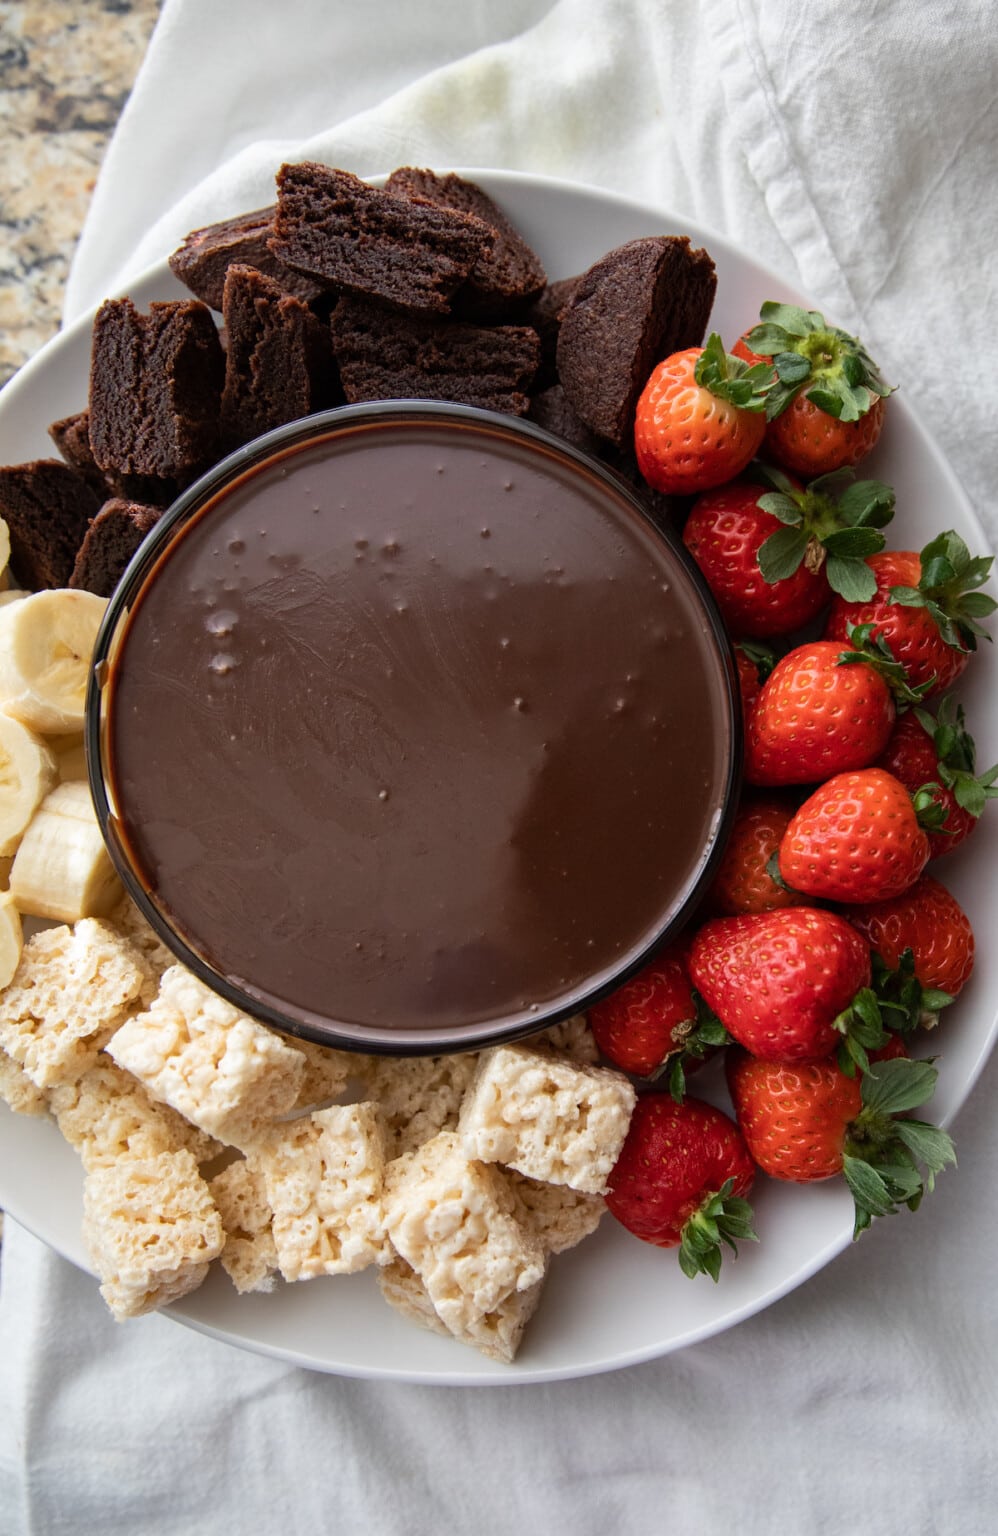 Easy Dipping Chocolate - Better Than Fondue! - Lauren's Latest